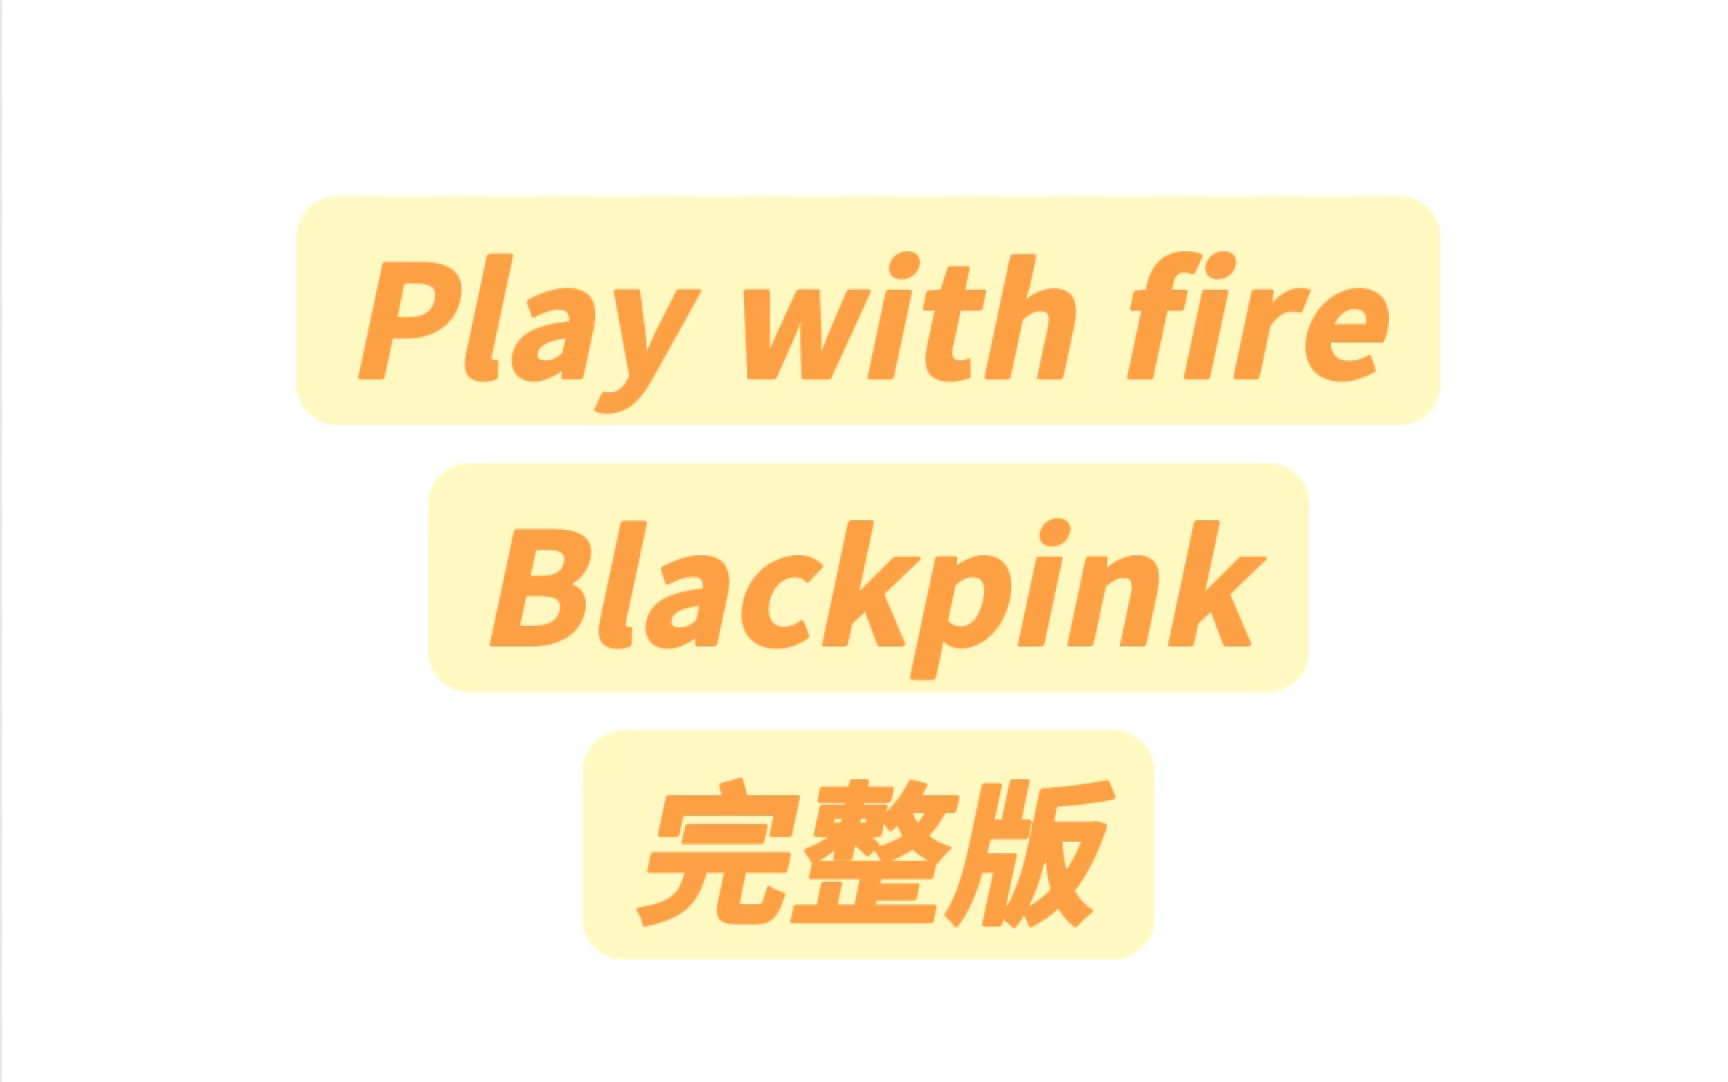 Play with fireBlackpink完整版音译教学#blackpink #playwithfire #玩火